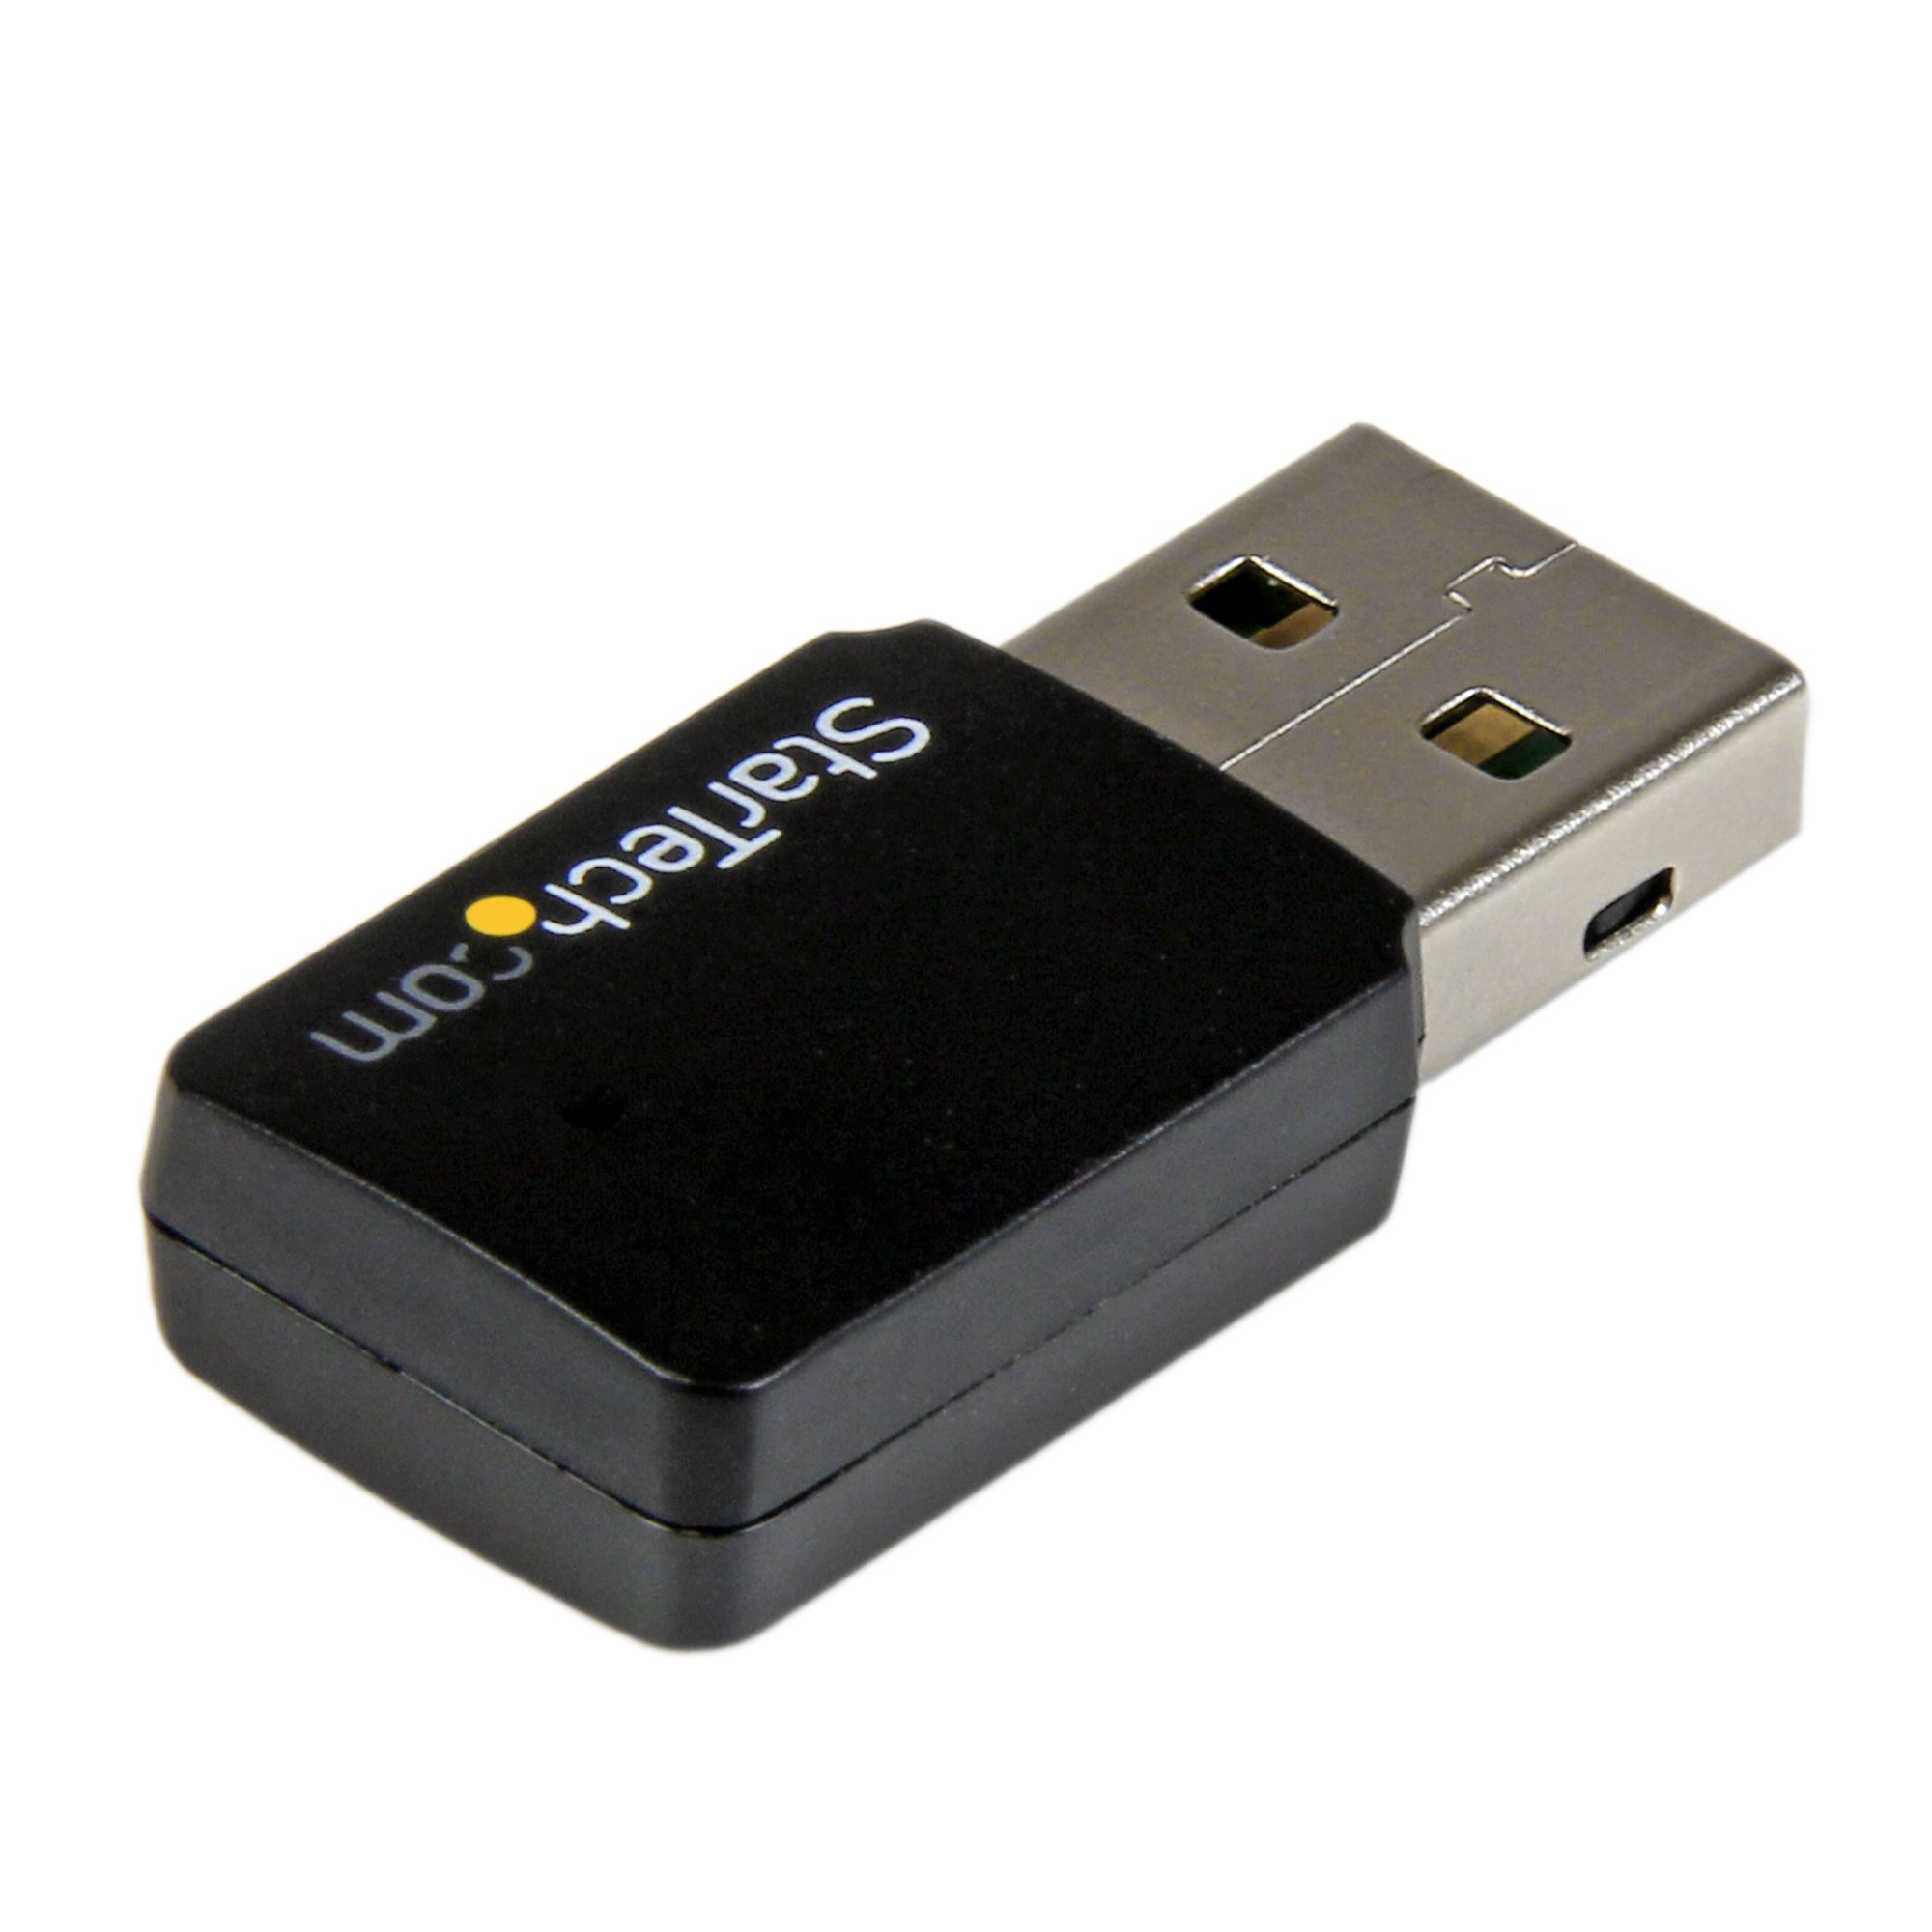 USB 2.0 Mini Adapter - Network Adapters | StarTech.com